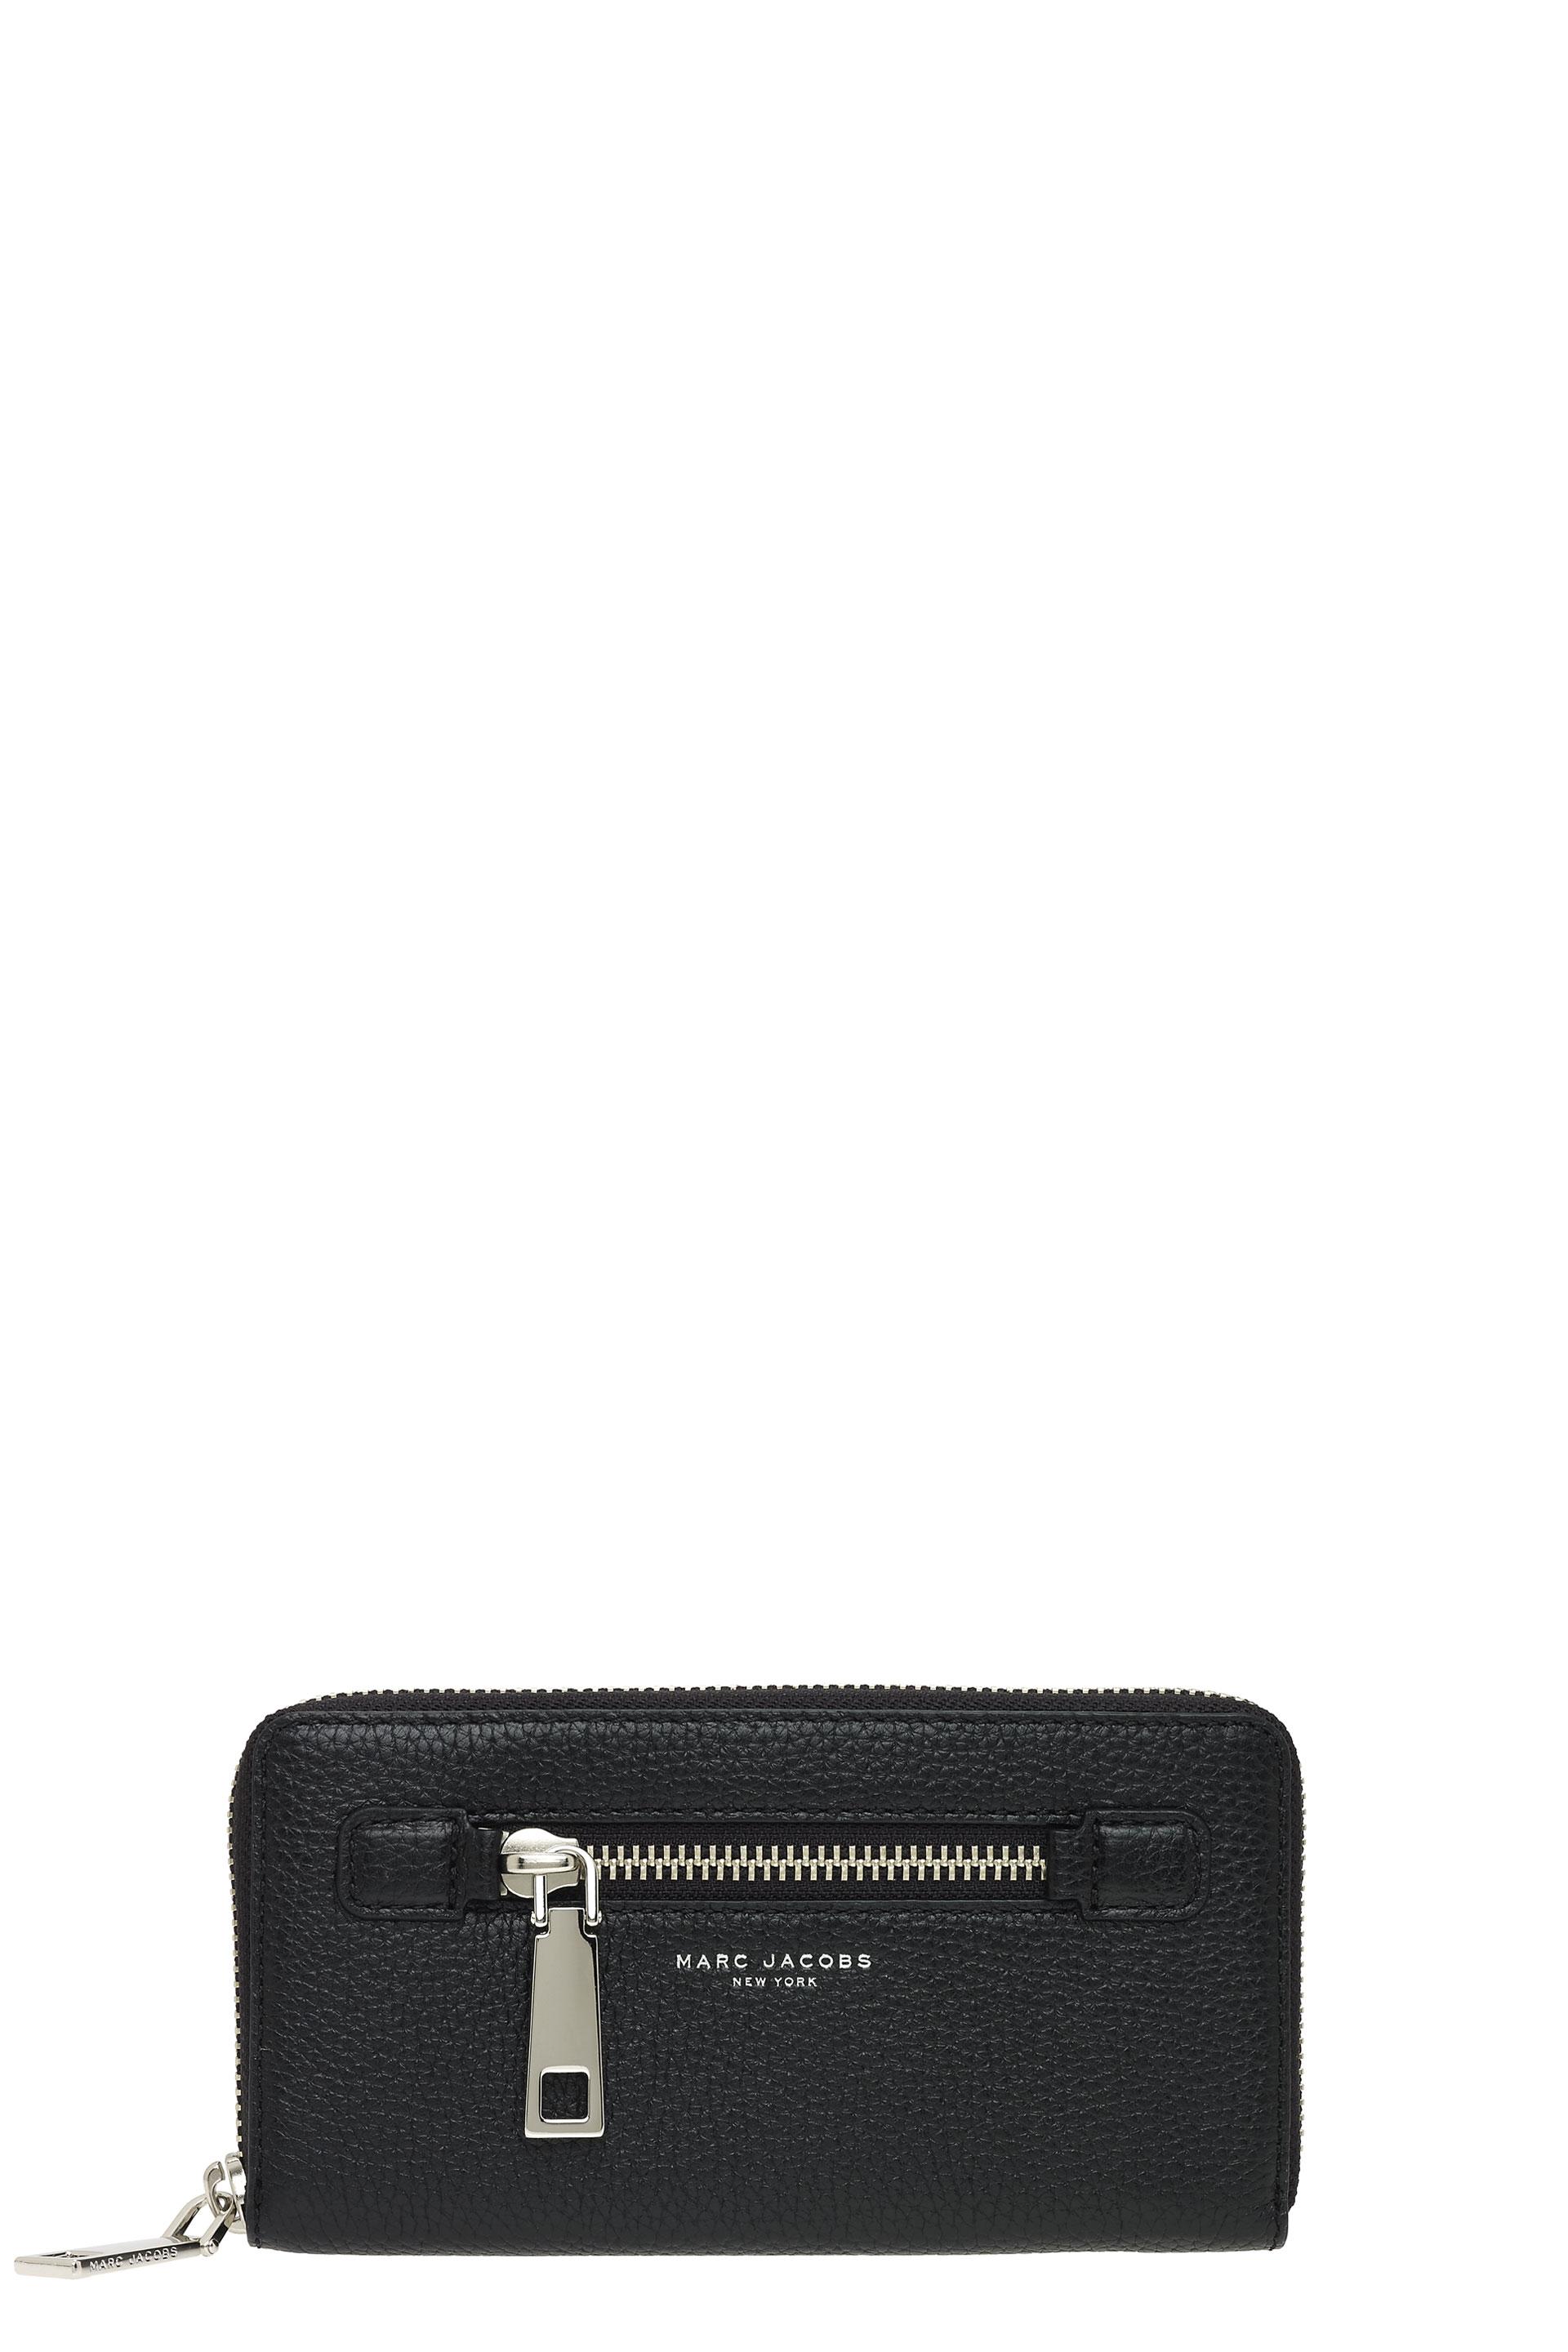 Marc Jacobs Gotham Standard Continental Wallet In Black | ModeSens